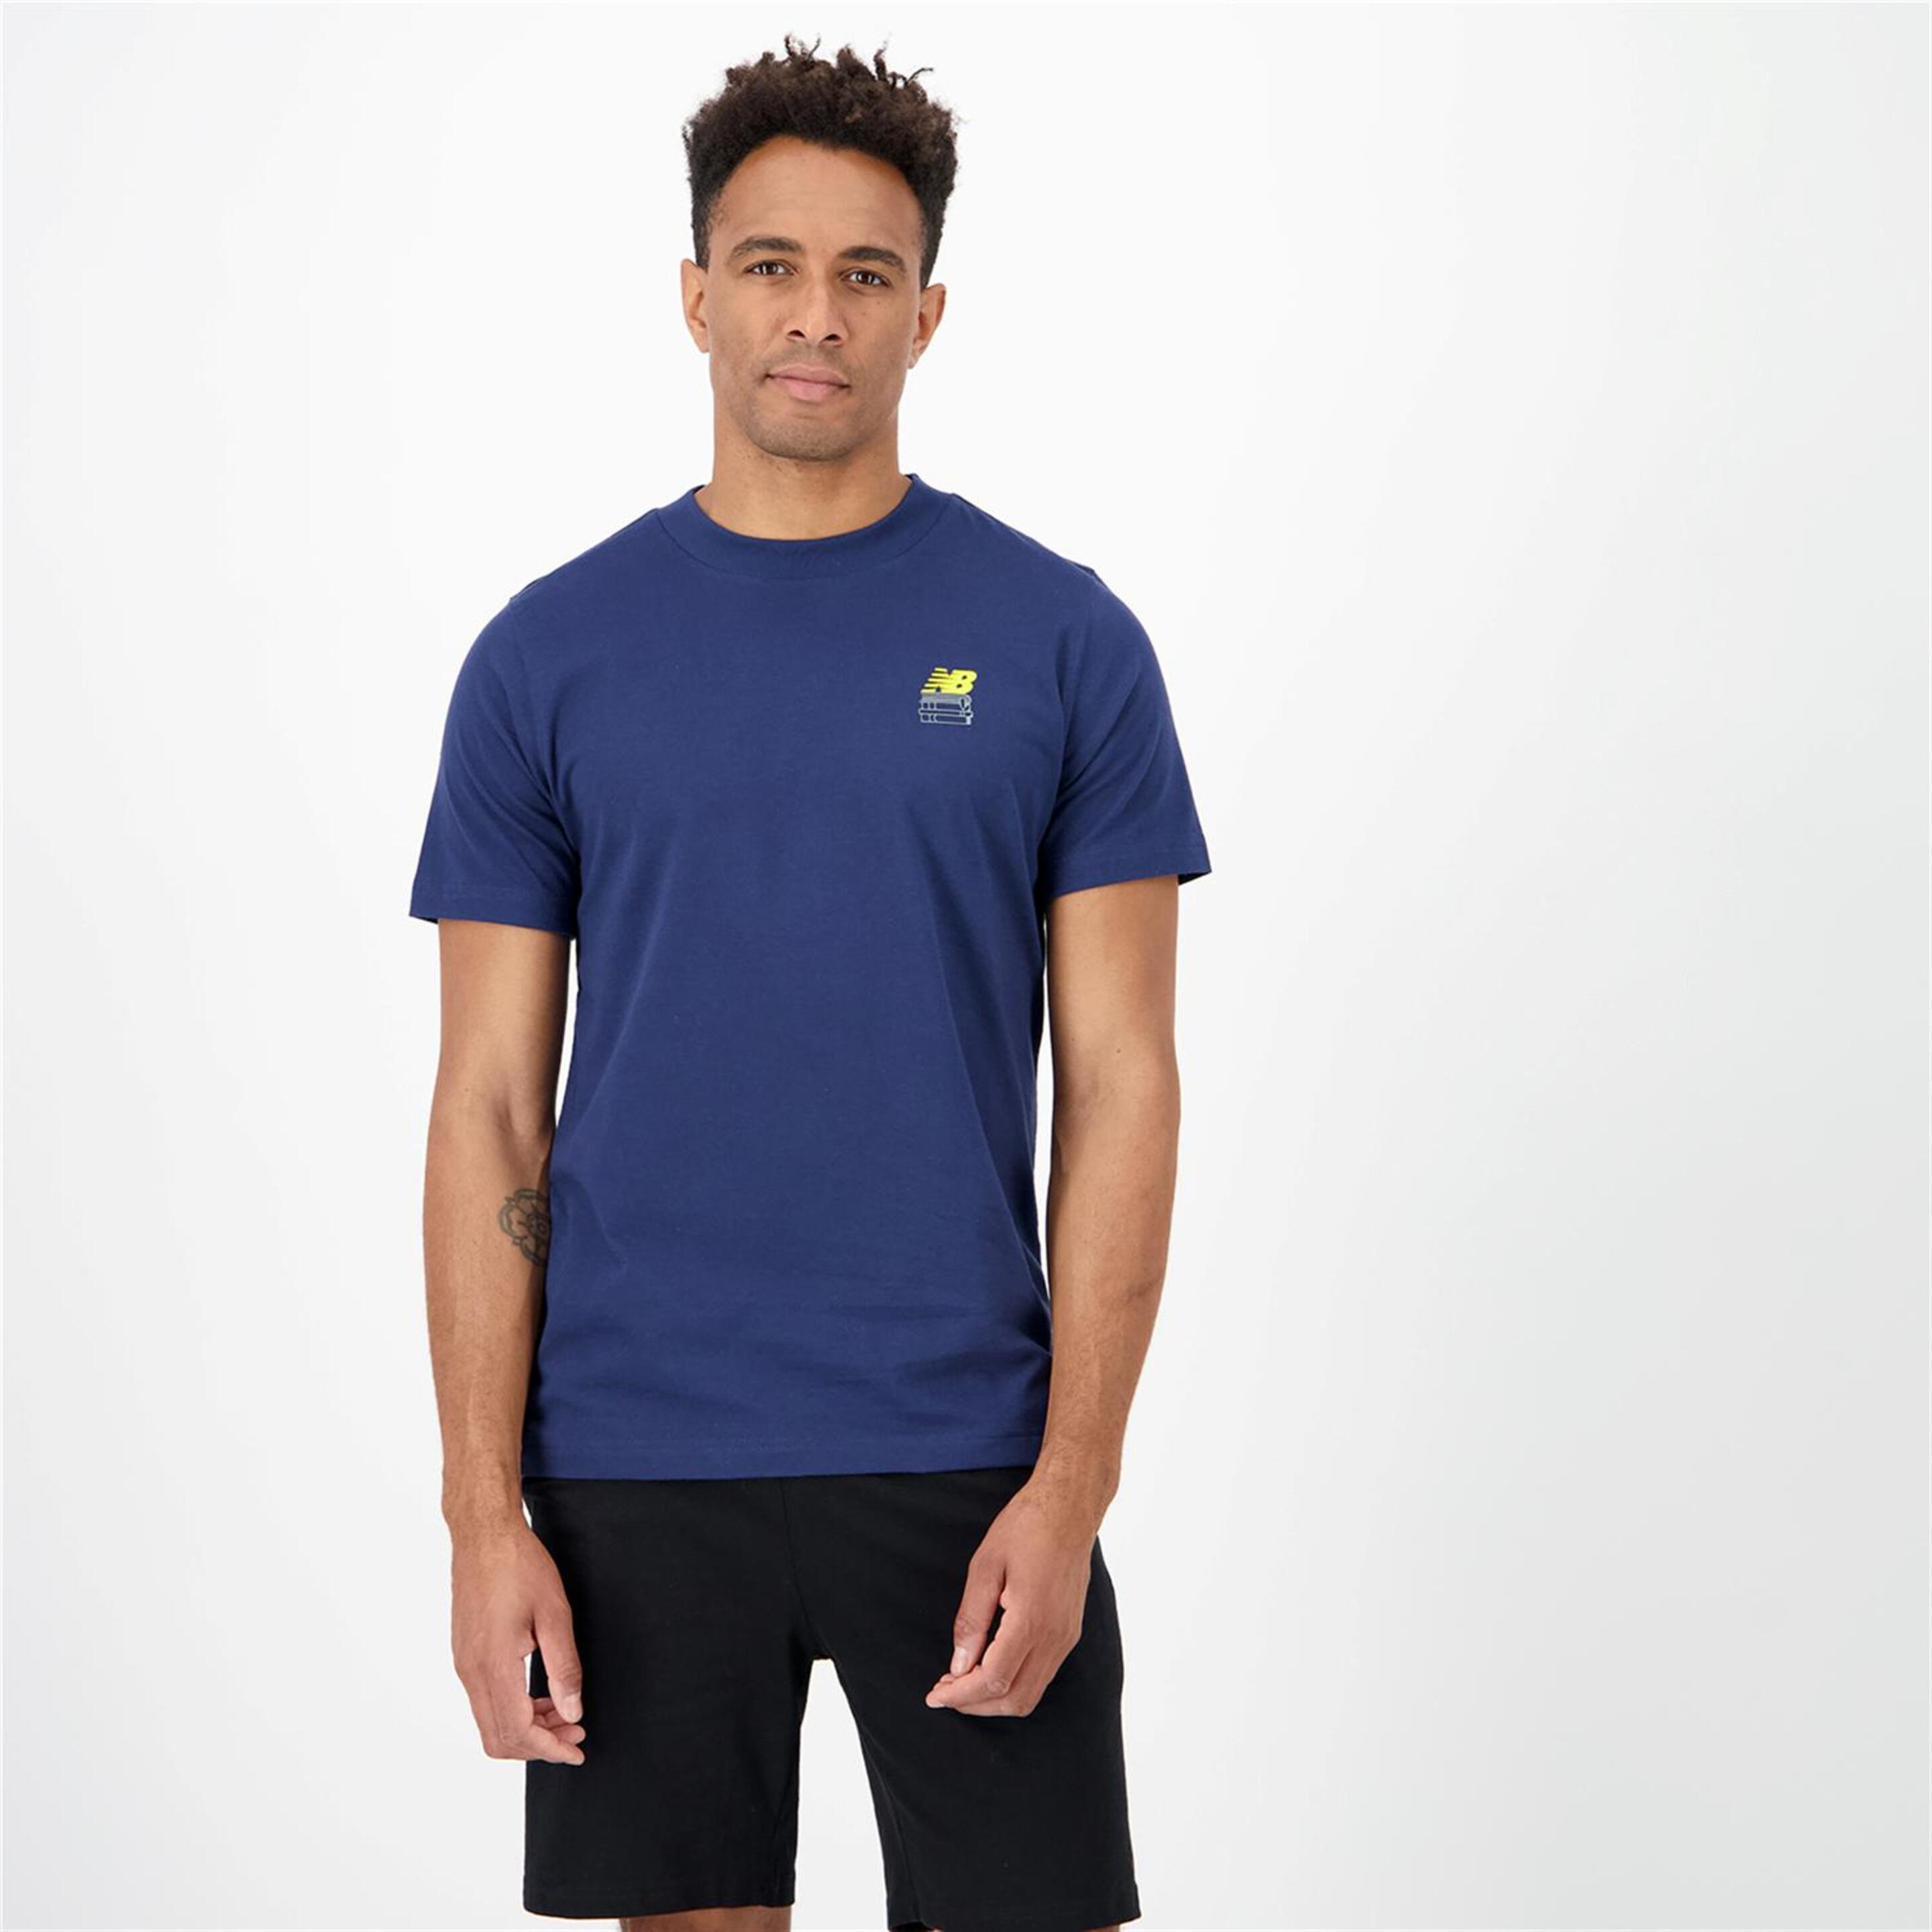 New Balance Book - azul - Camiseta Hombre